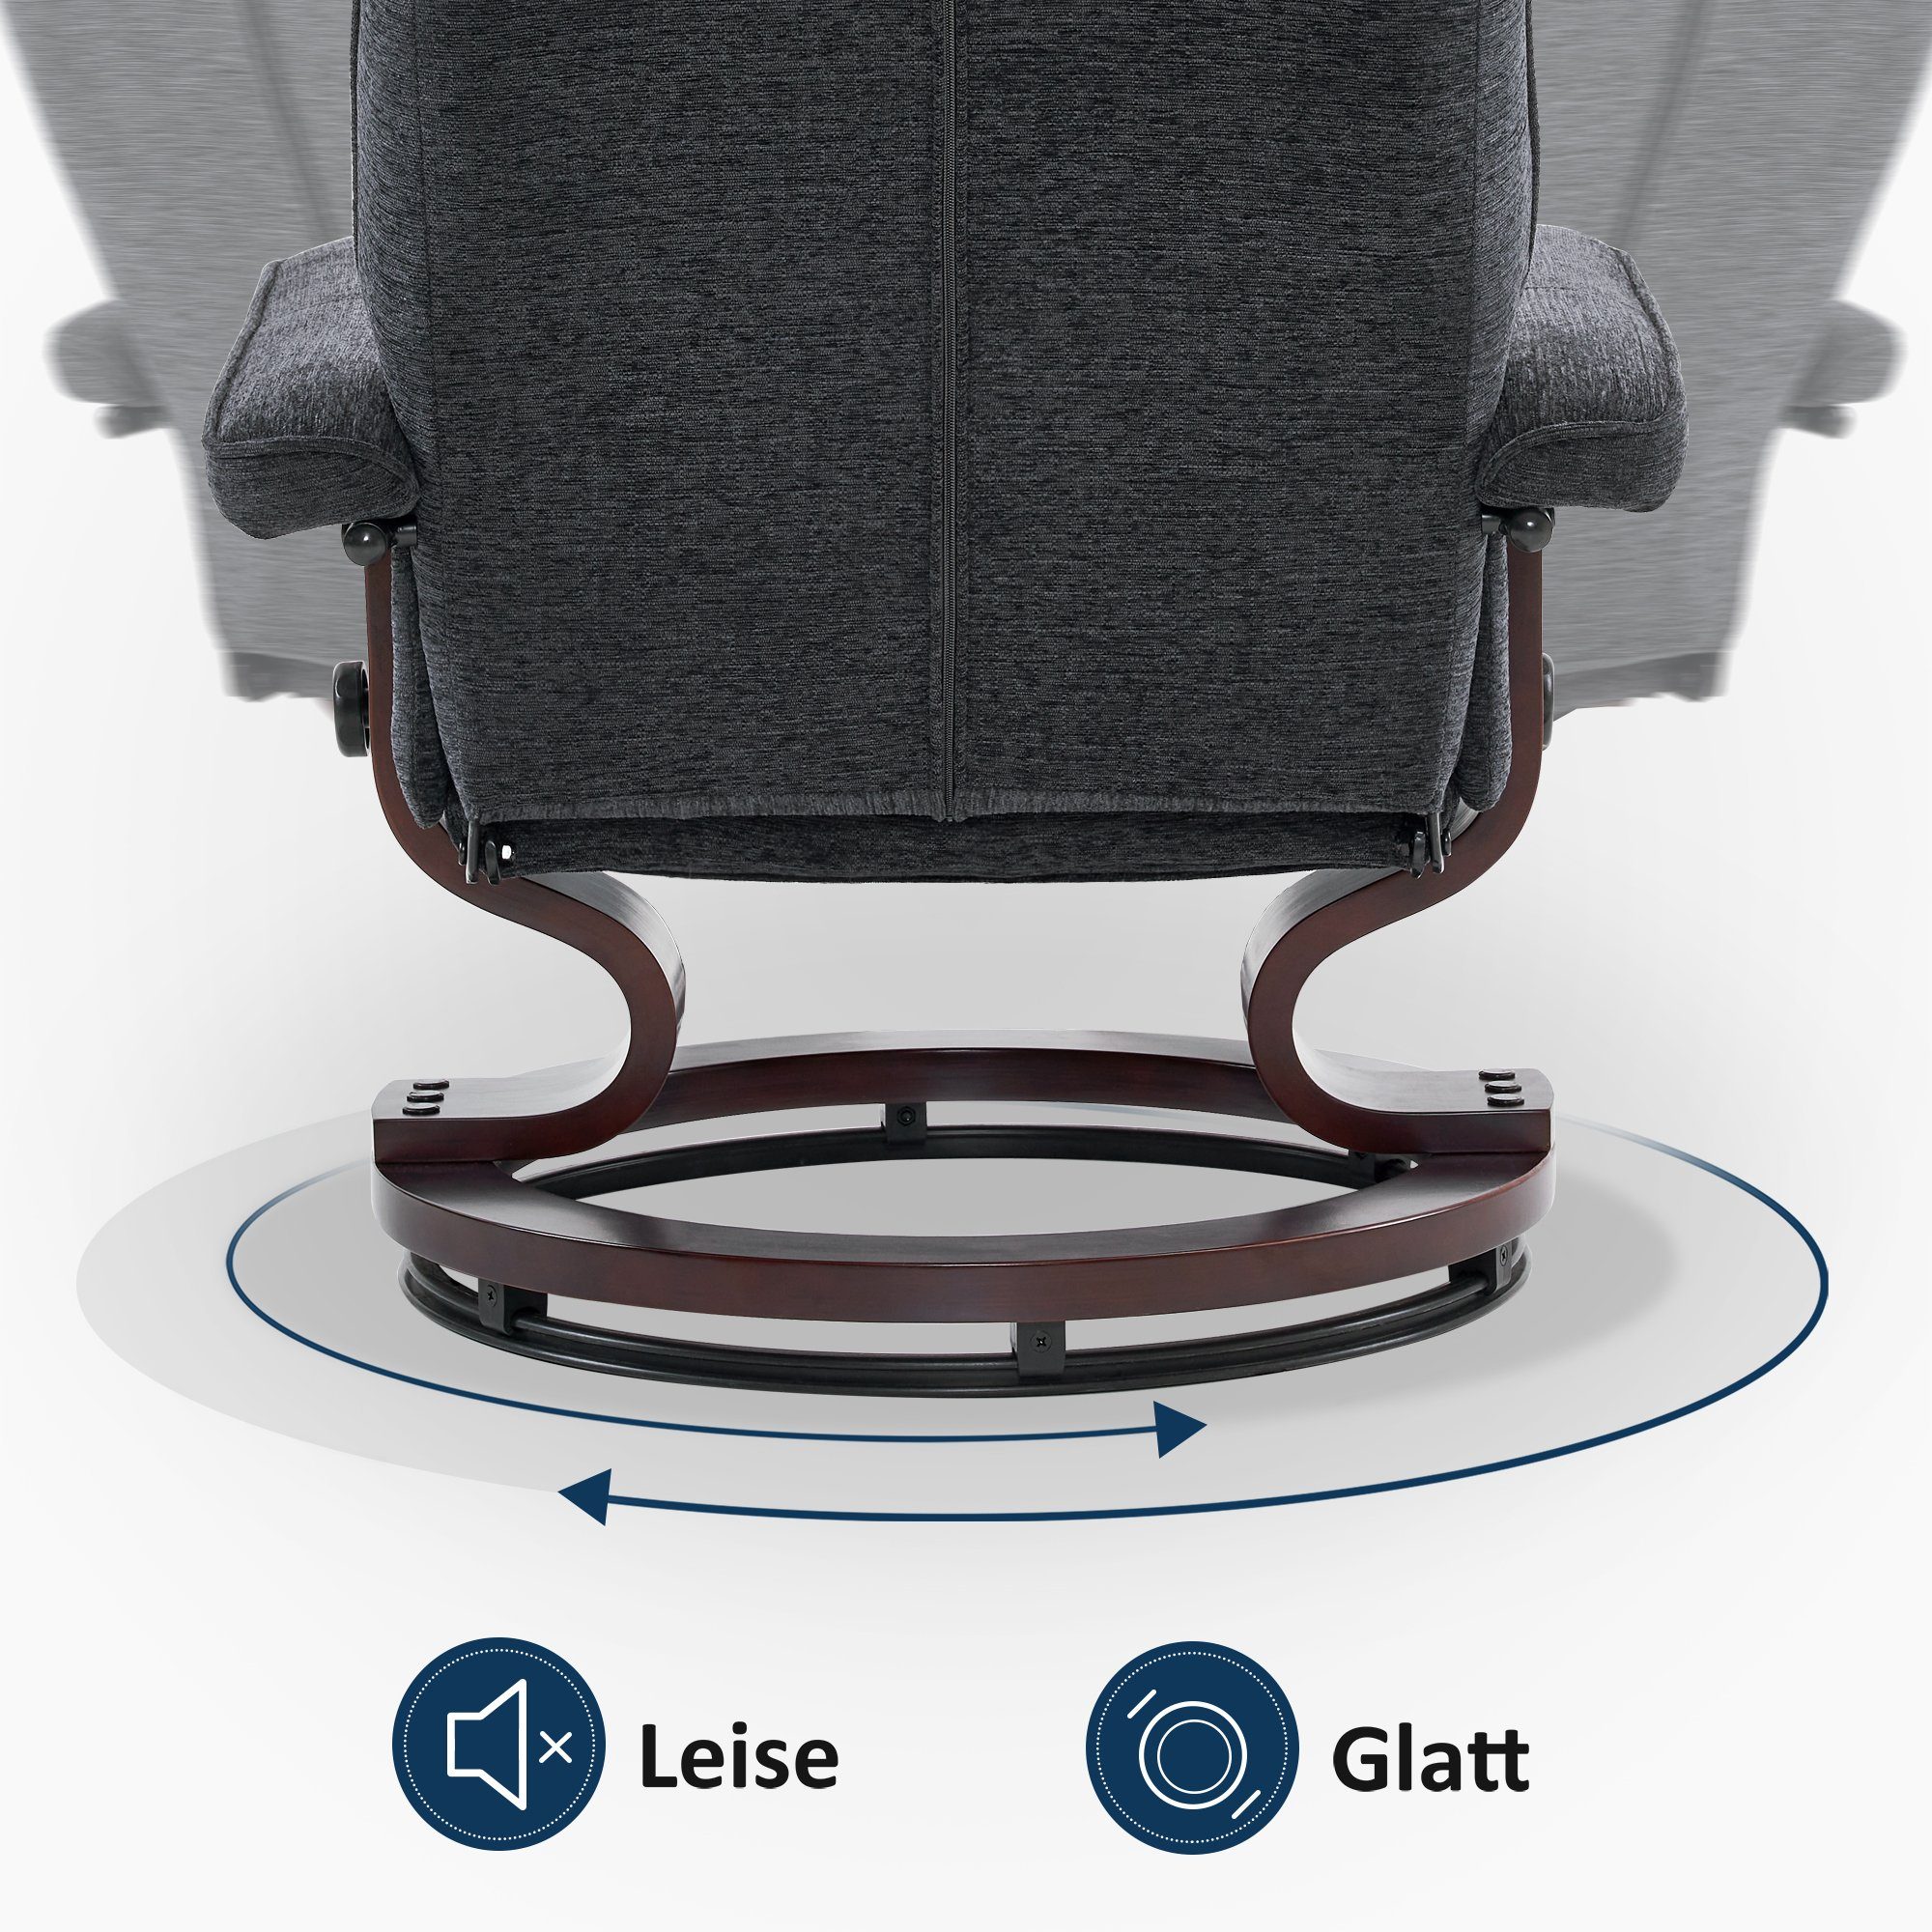 MCombo MCombo Hocker Hocker Relaxsessel Liegefunktion, mit mit Fernsehsessel 360°drehbarer 9019, TV-Sessel mit Dunkelgrau-Webstoff